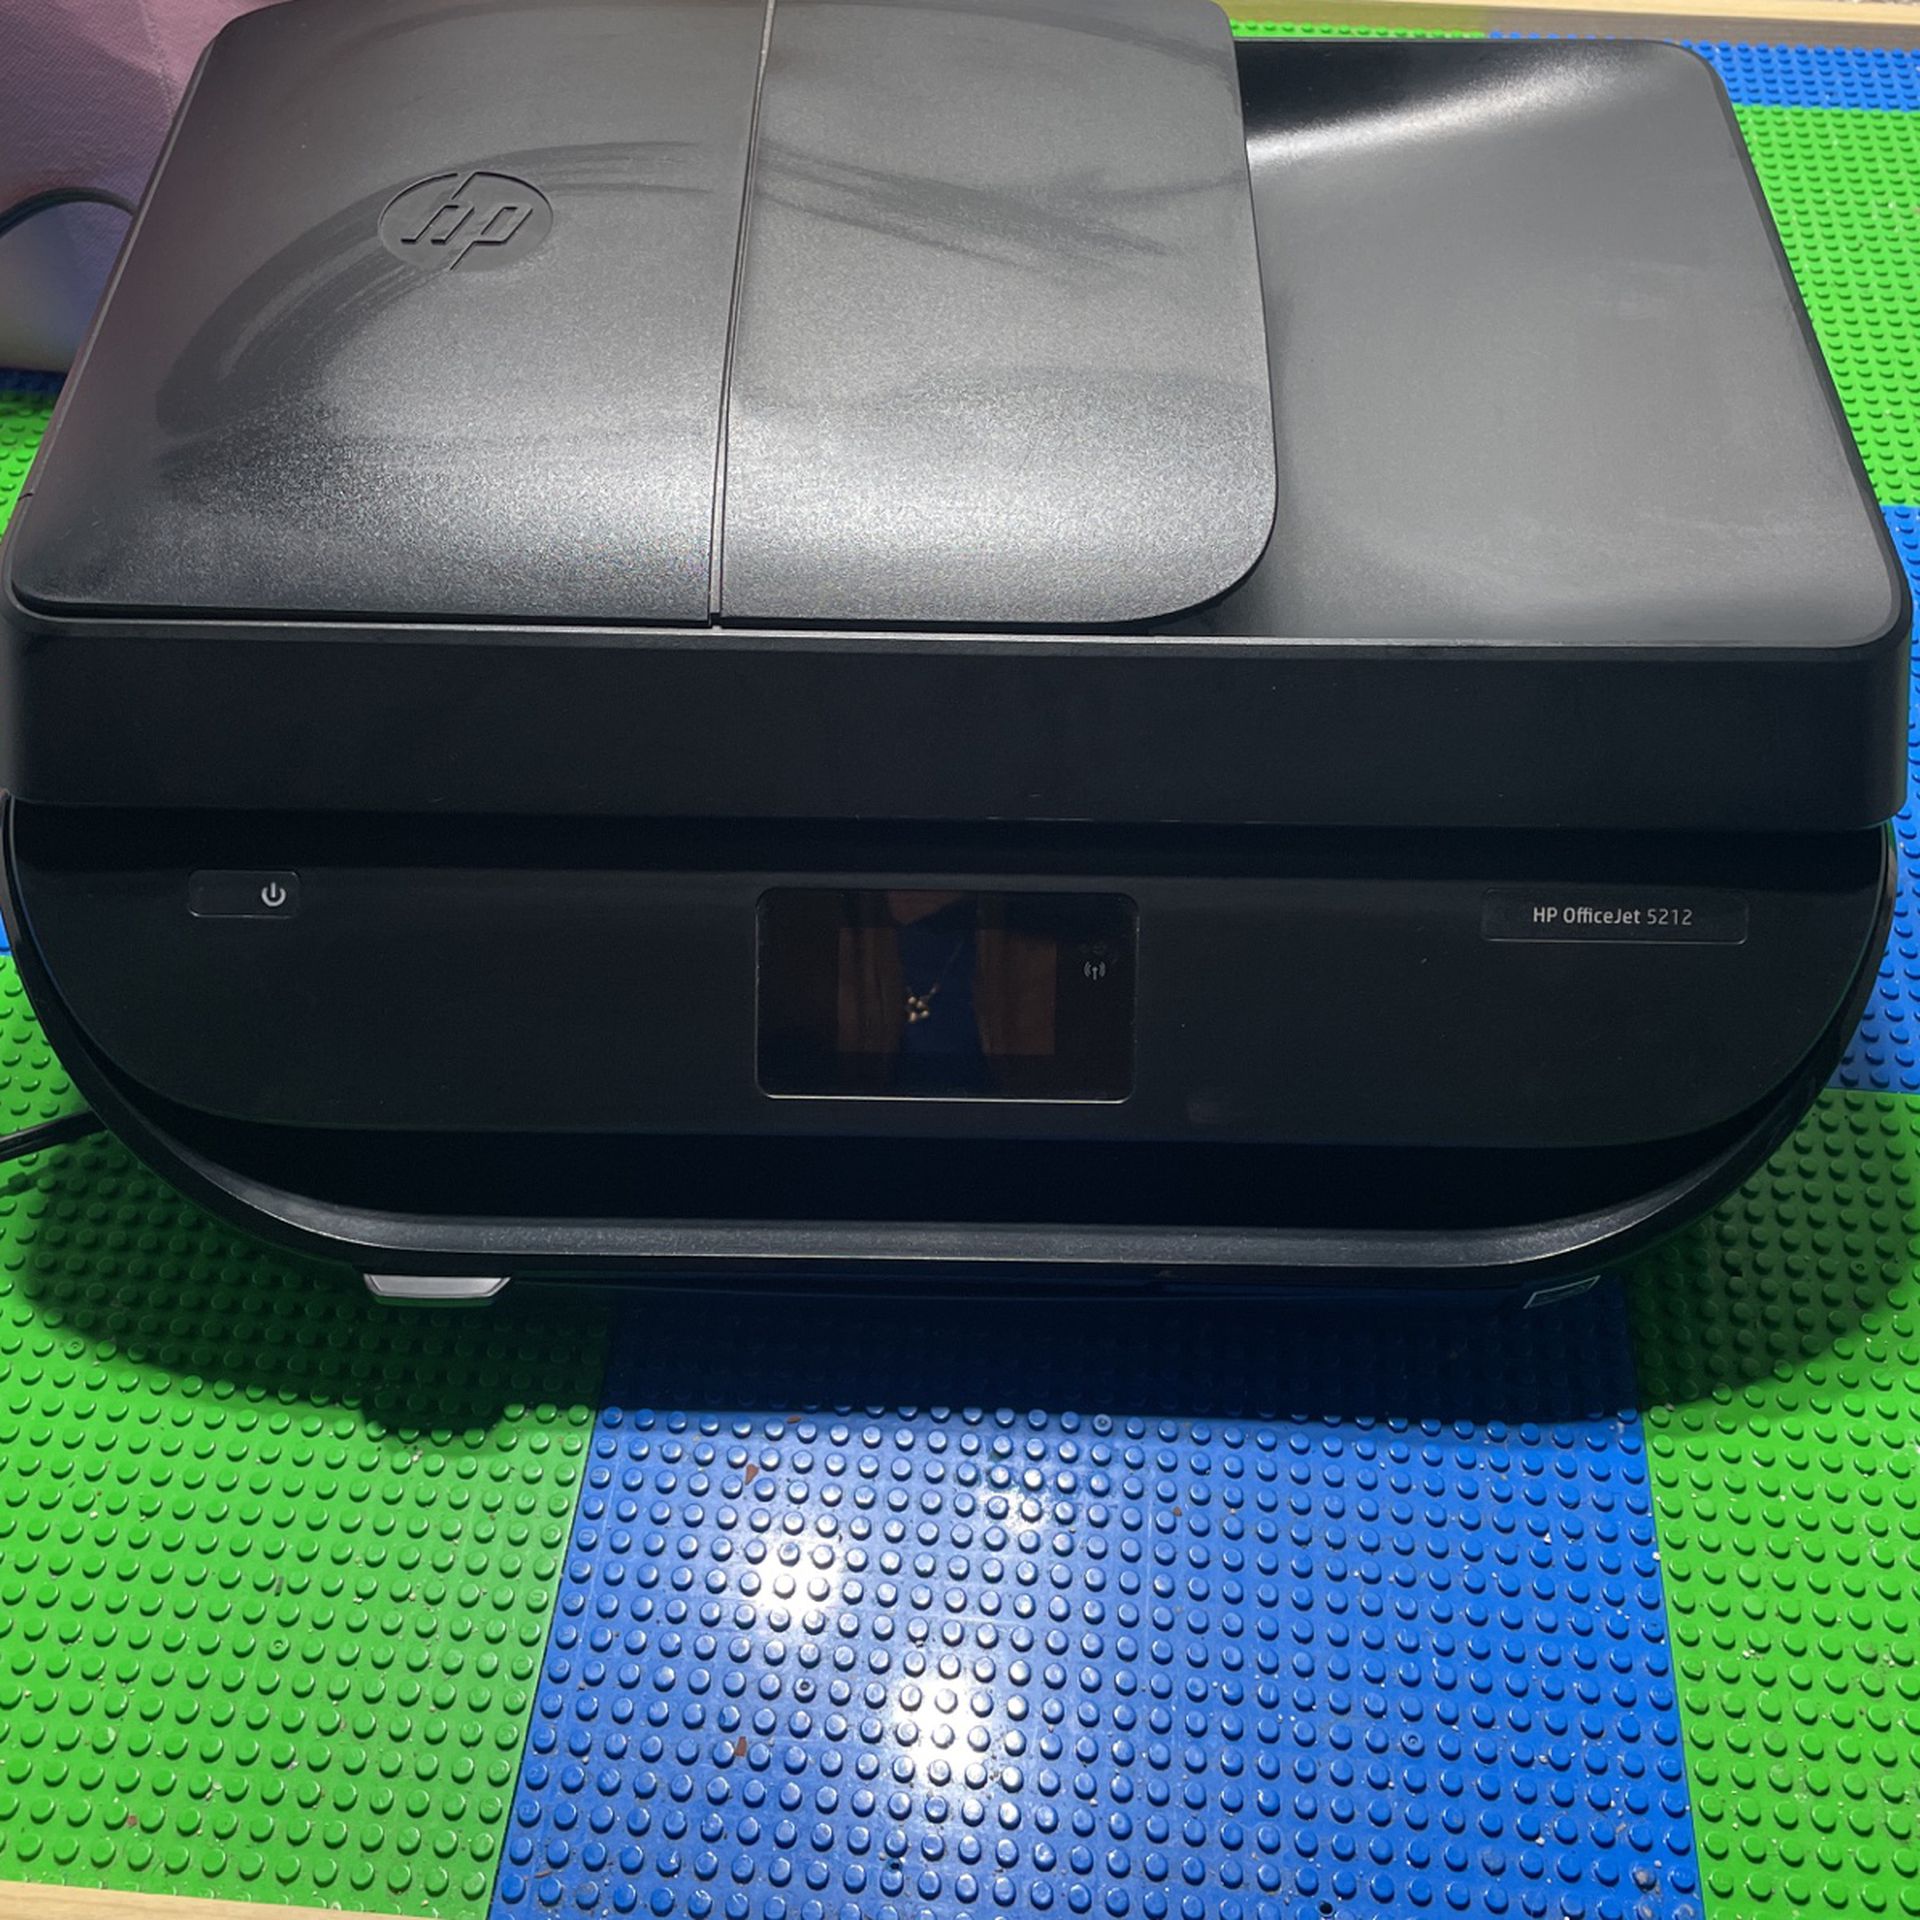 HP Office Jet 5212 Printer